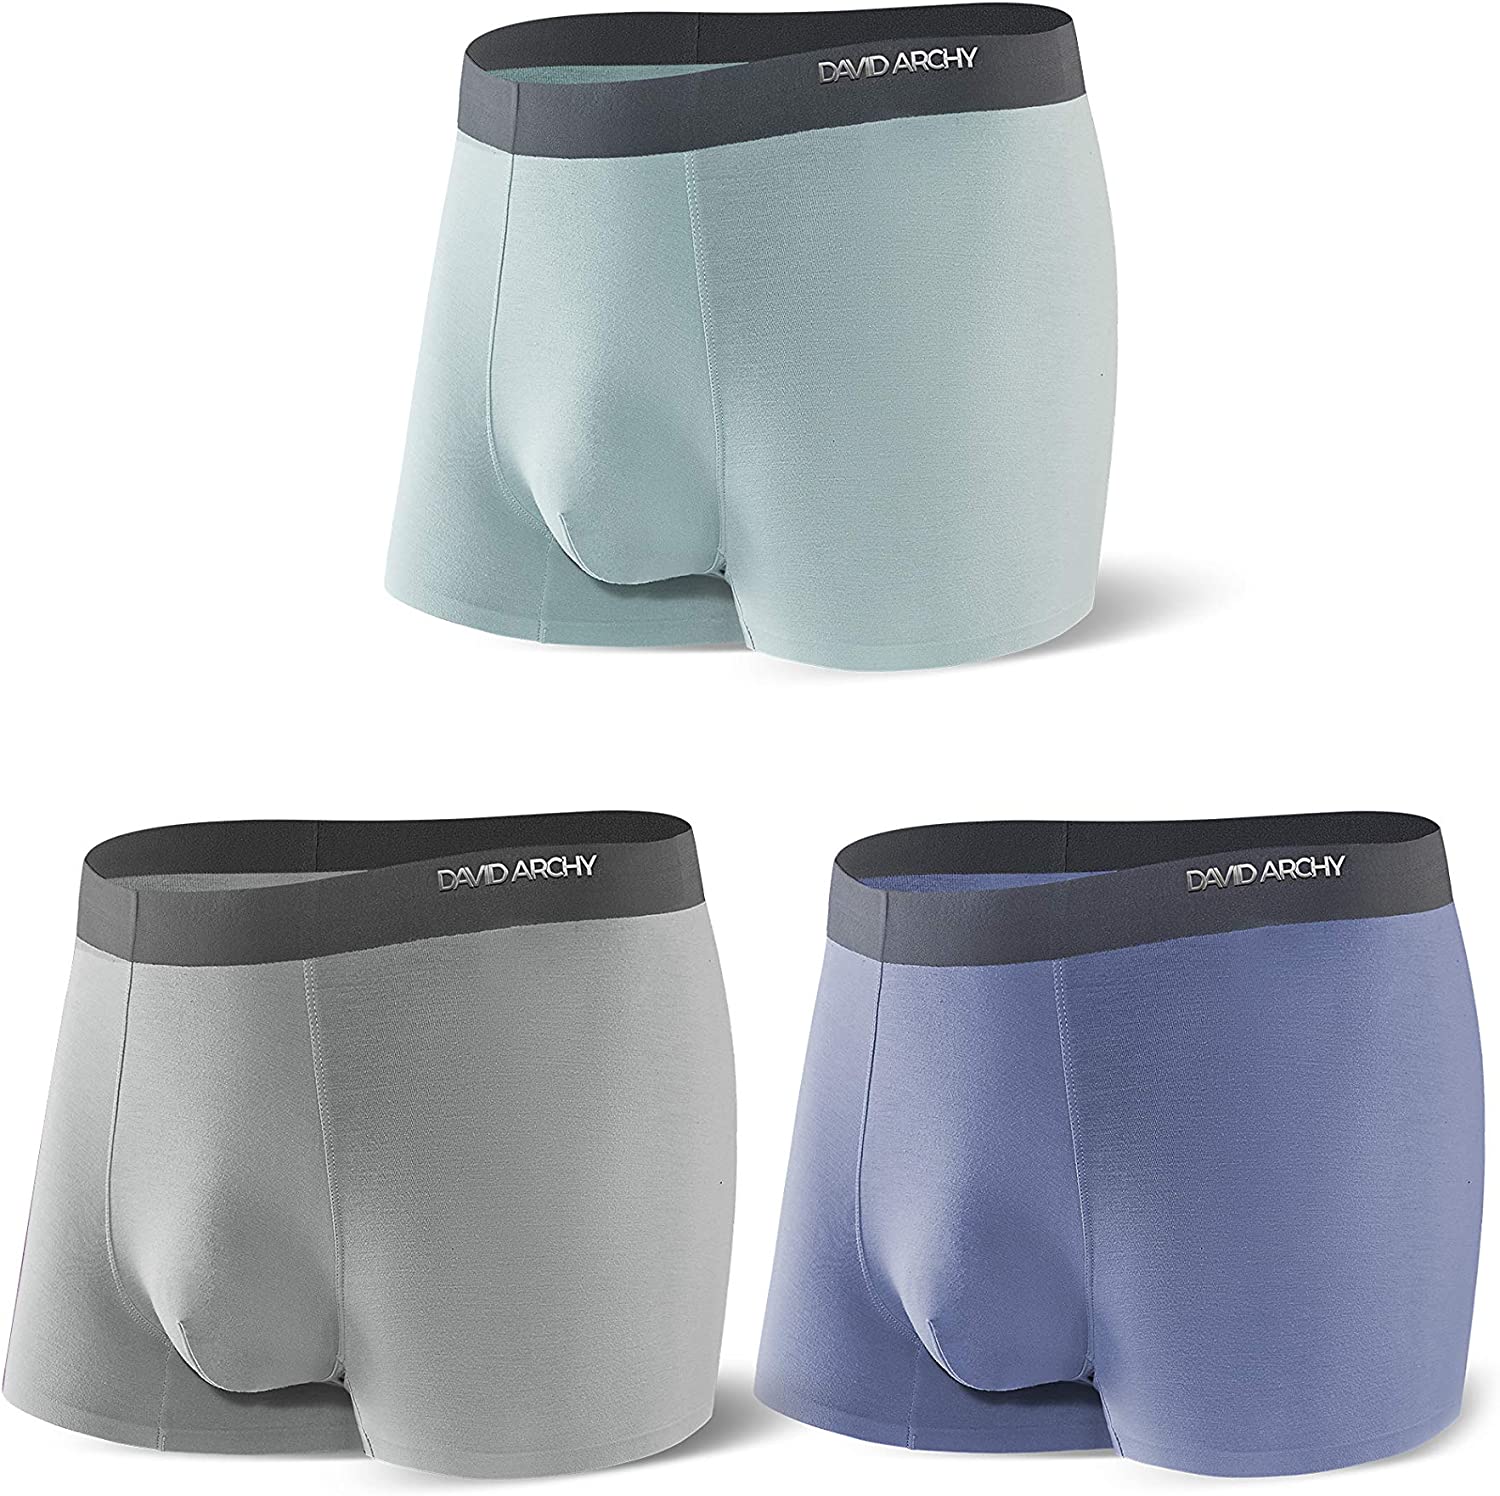 DAVID ARCHY Men's Underwear Ultra Soft Micro Modal Breathable